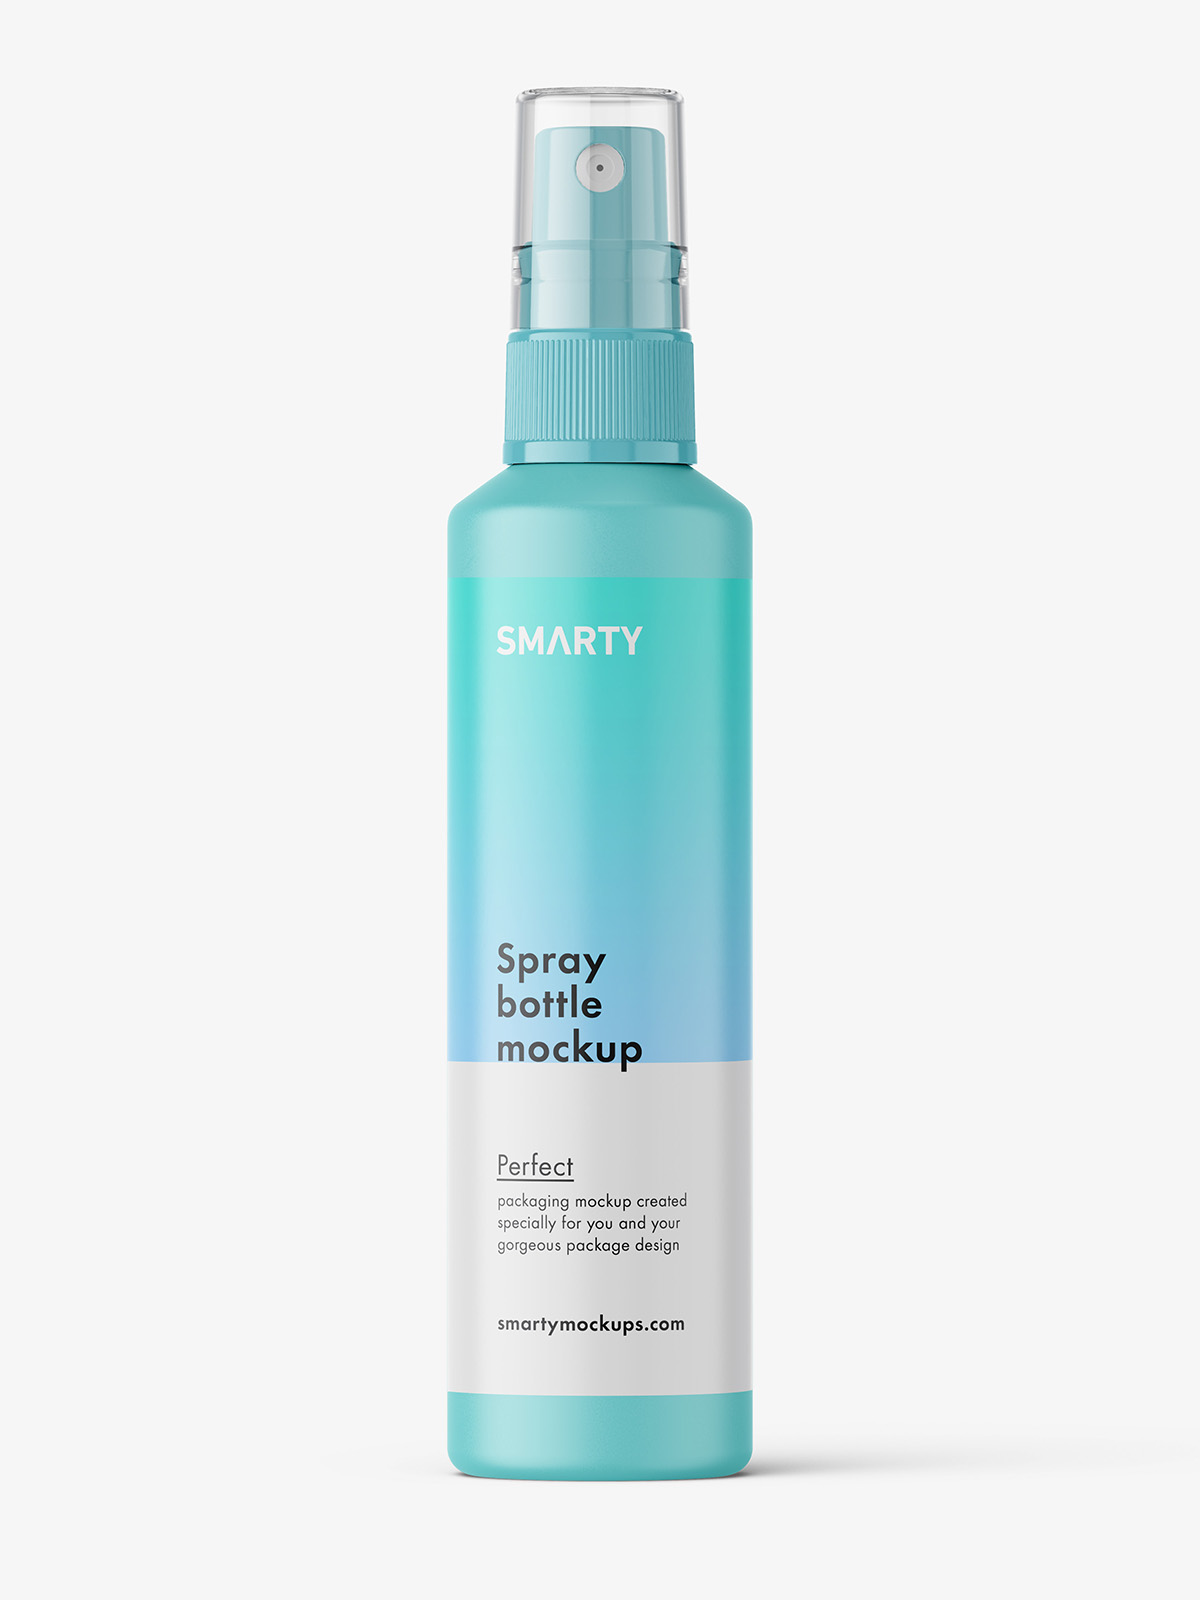 Download Spray bottle mockup / matt - Smarty Mockups